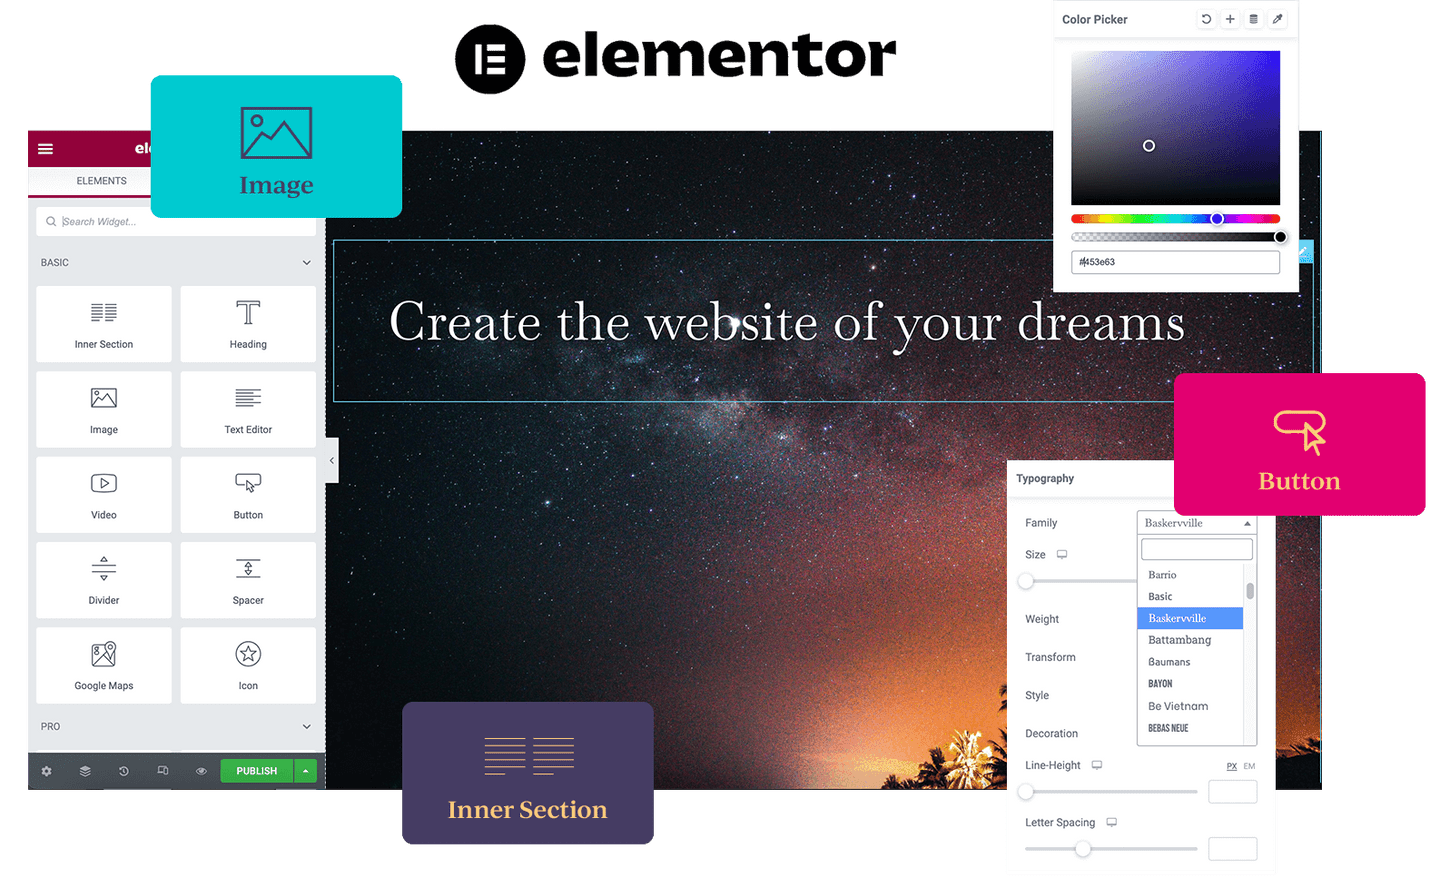 Elementor elements in a screen